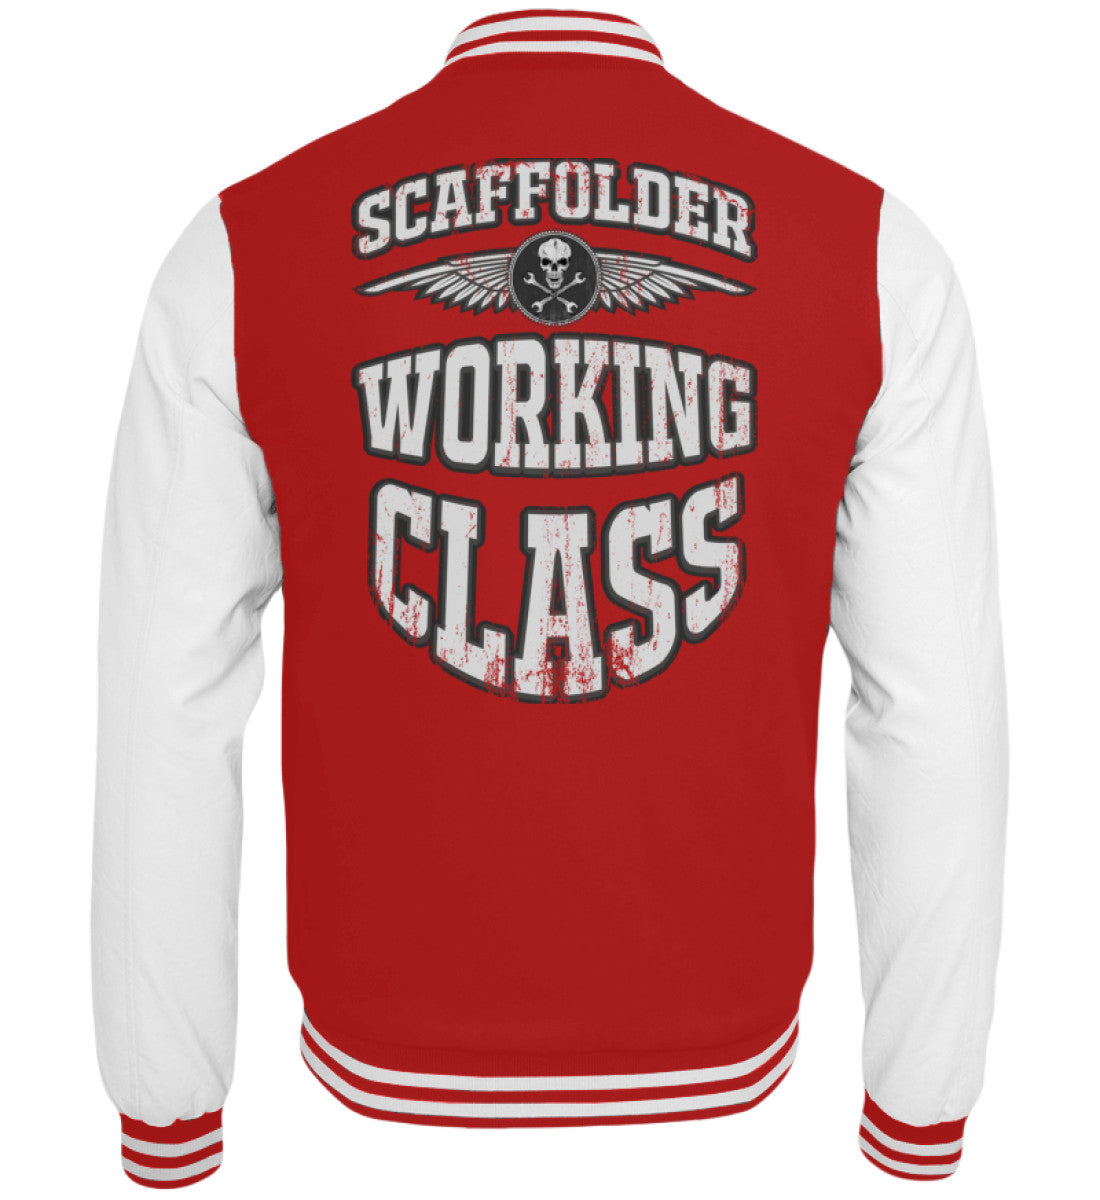 Scaffolder Working Class  - College Sweatjacke €59.95 Gerüstbauer - Shop >>